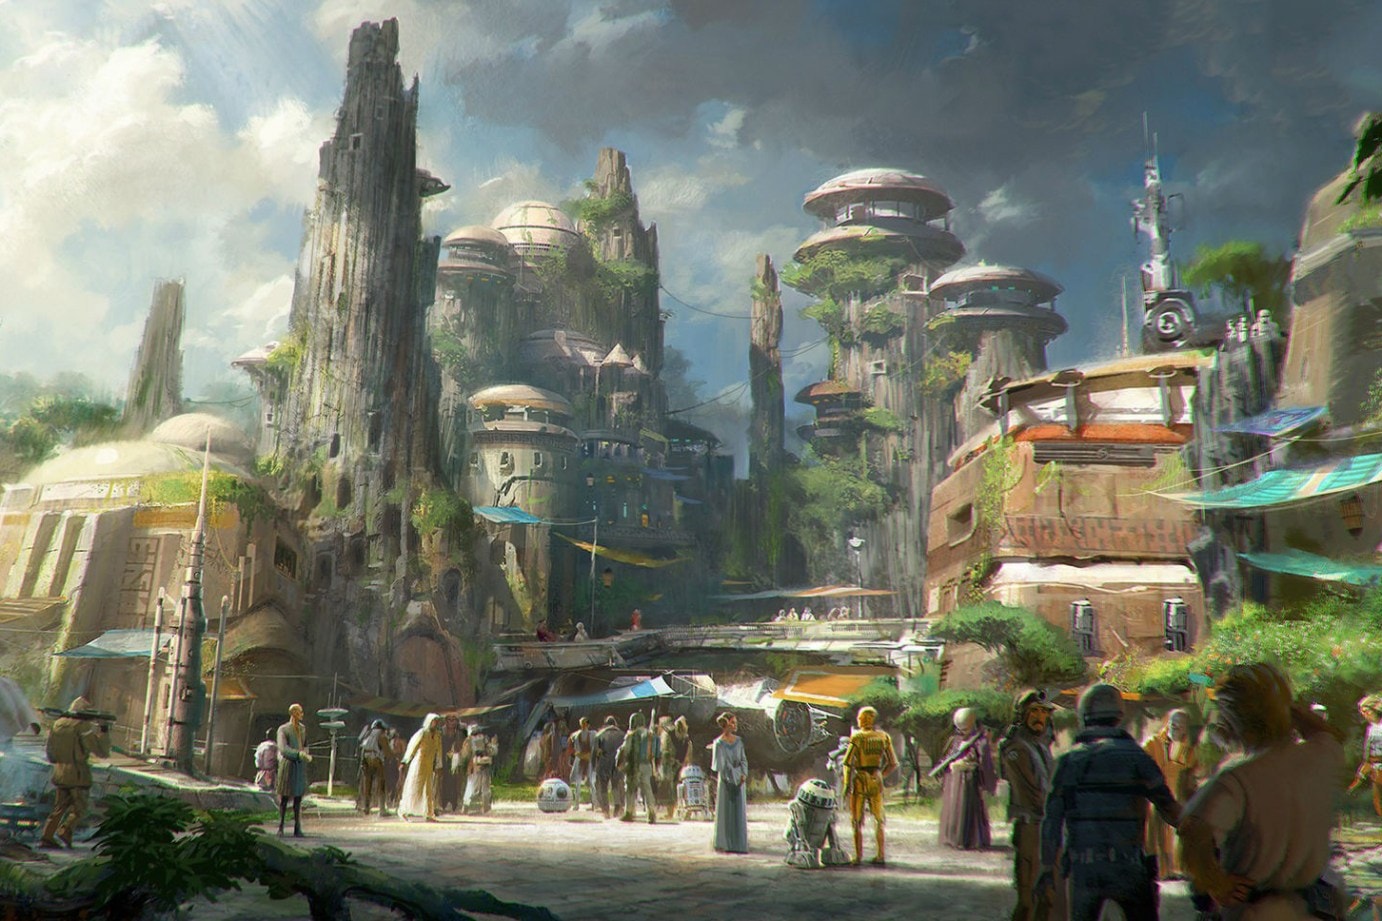 Disney Star Wars Theme Park Open 2019